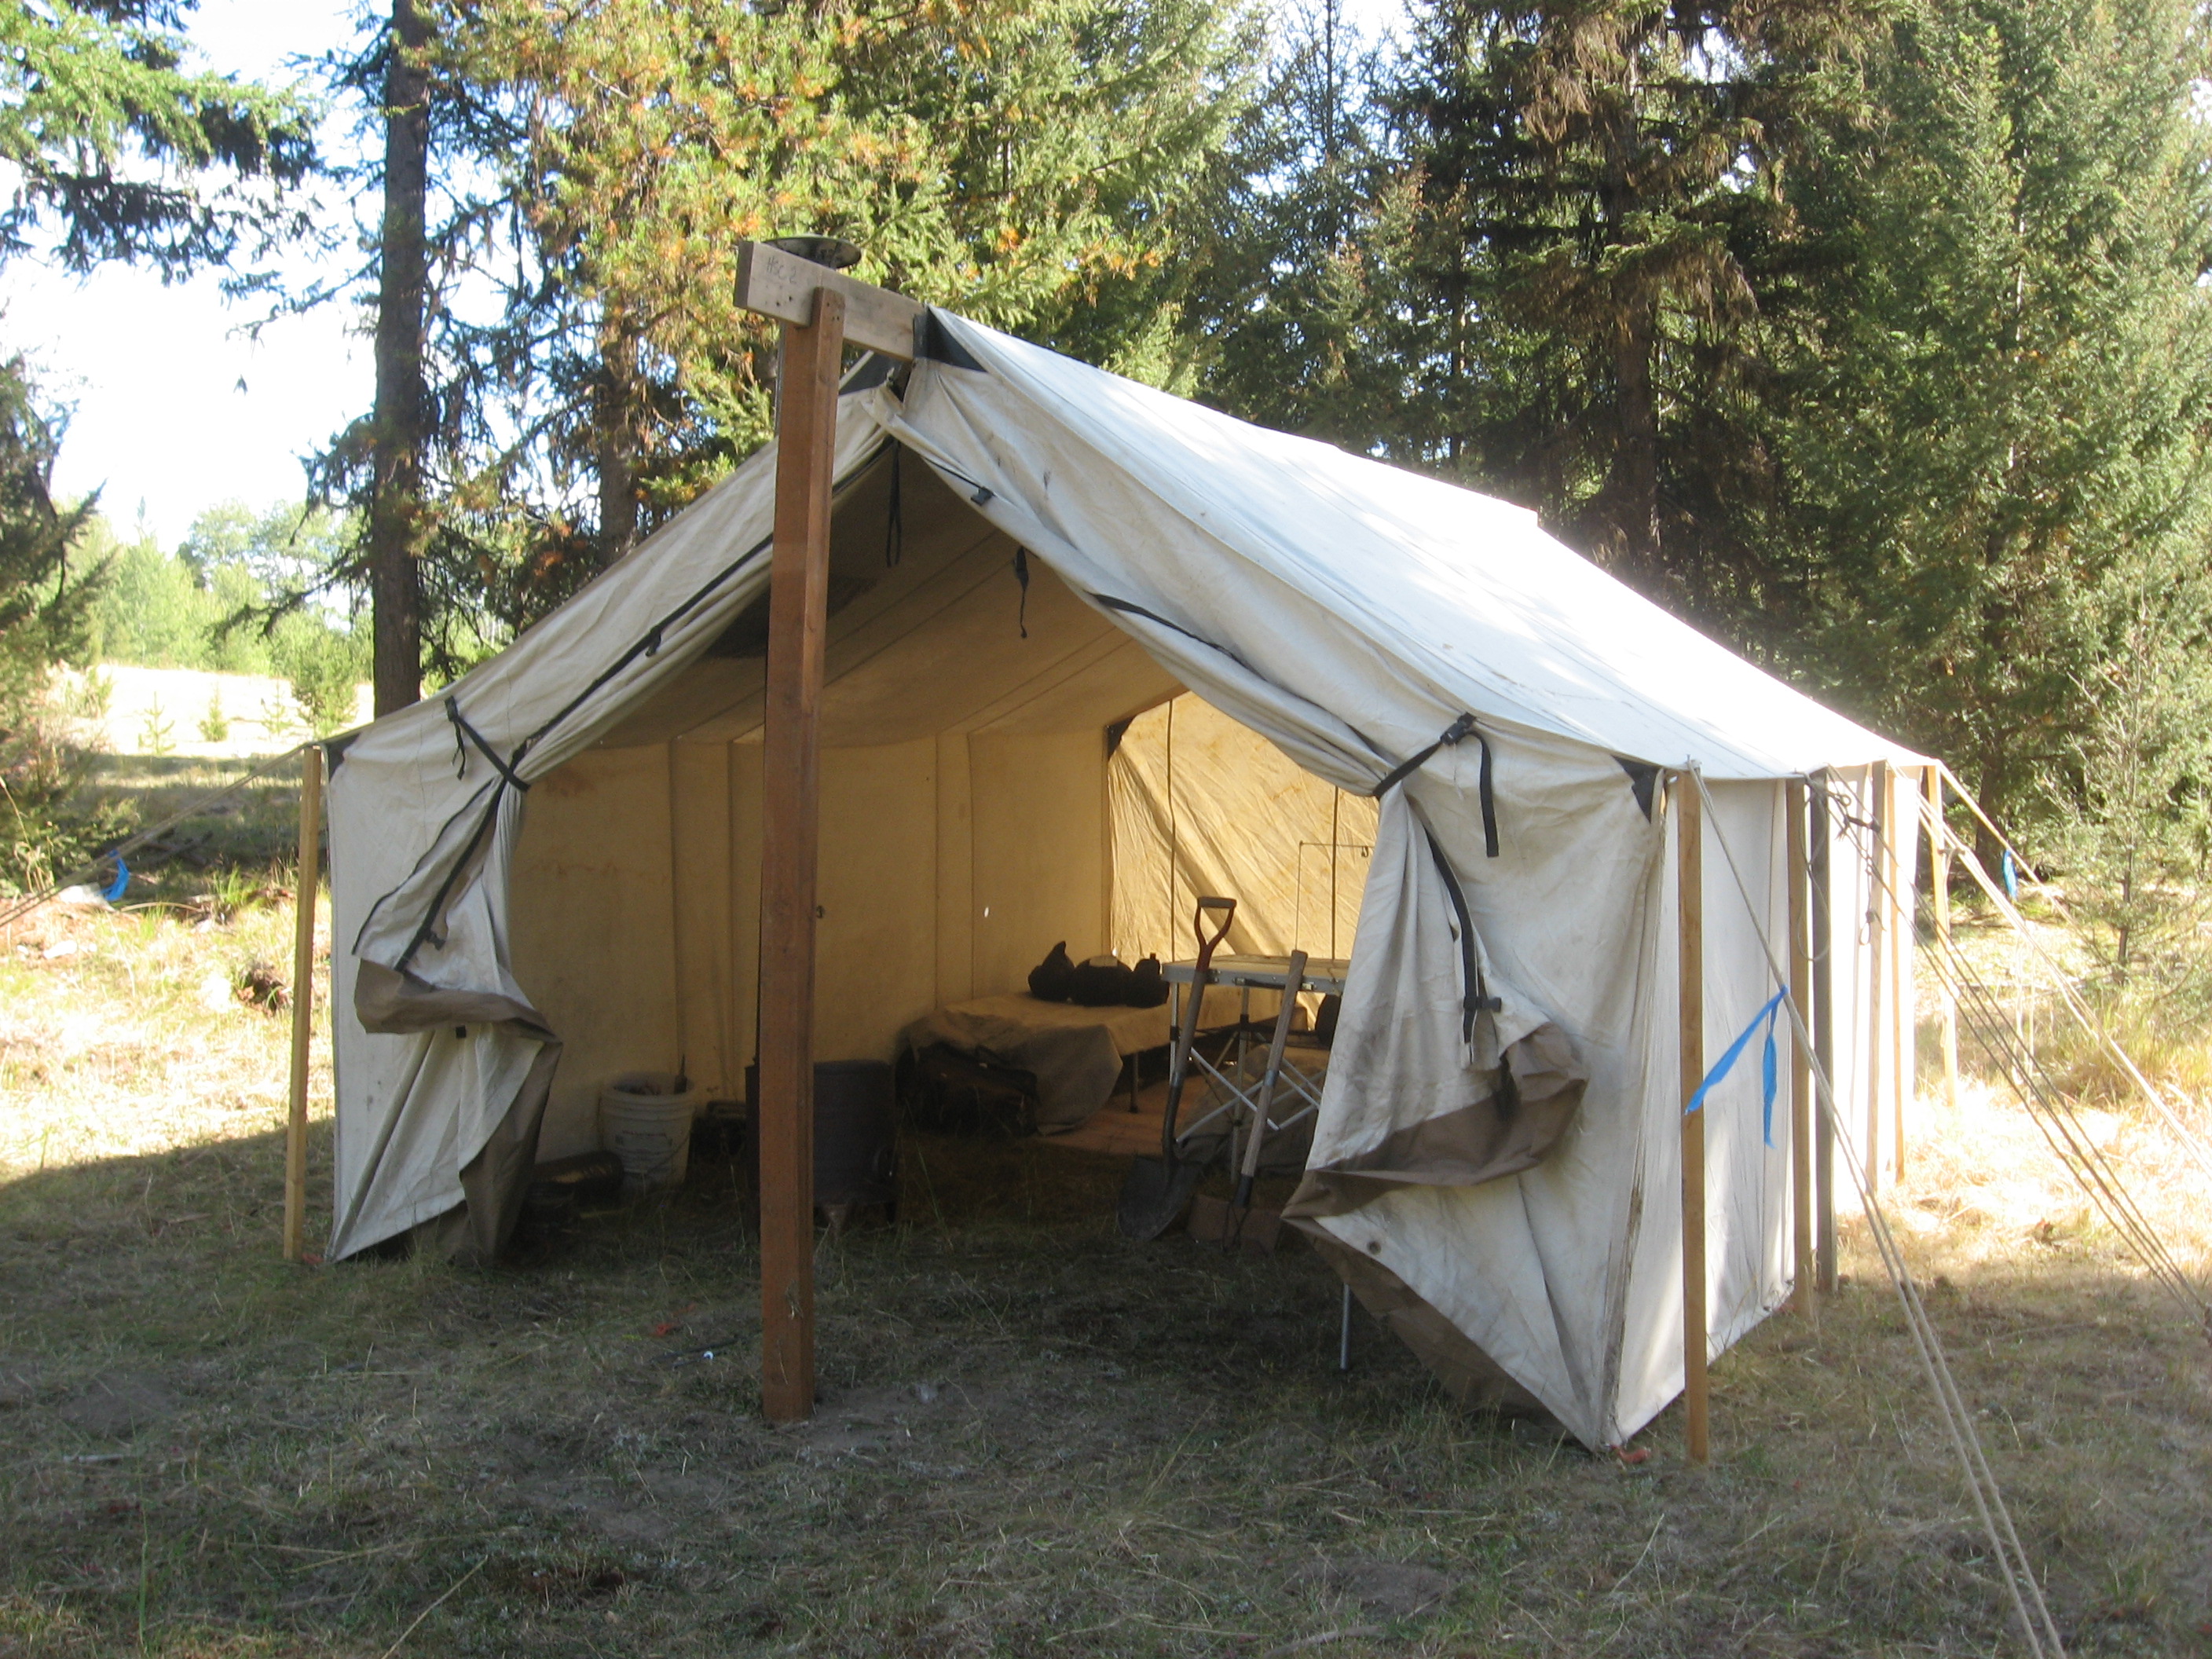 Camping platform. Шатер Camping World. Палатка Camping Tents 2905. Палатка шатер Onree Ohio. Обустройство кемпинга в палатках.